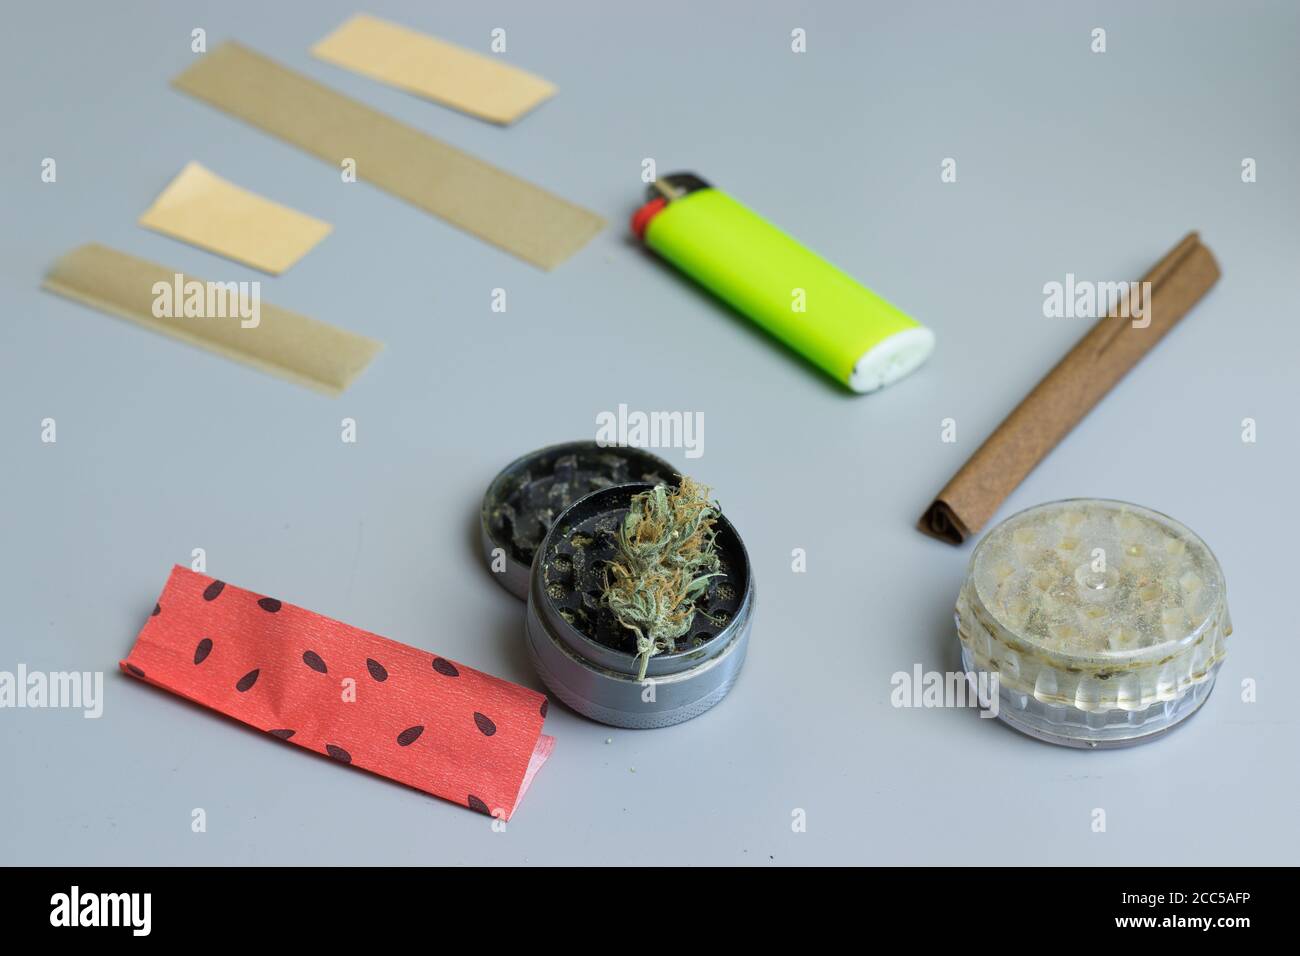 Smoking accessories for cannabis drug use. Marijuana buds Stock Photo